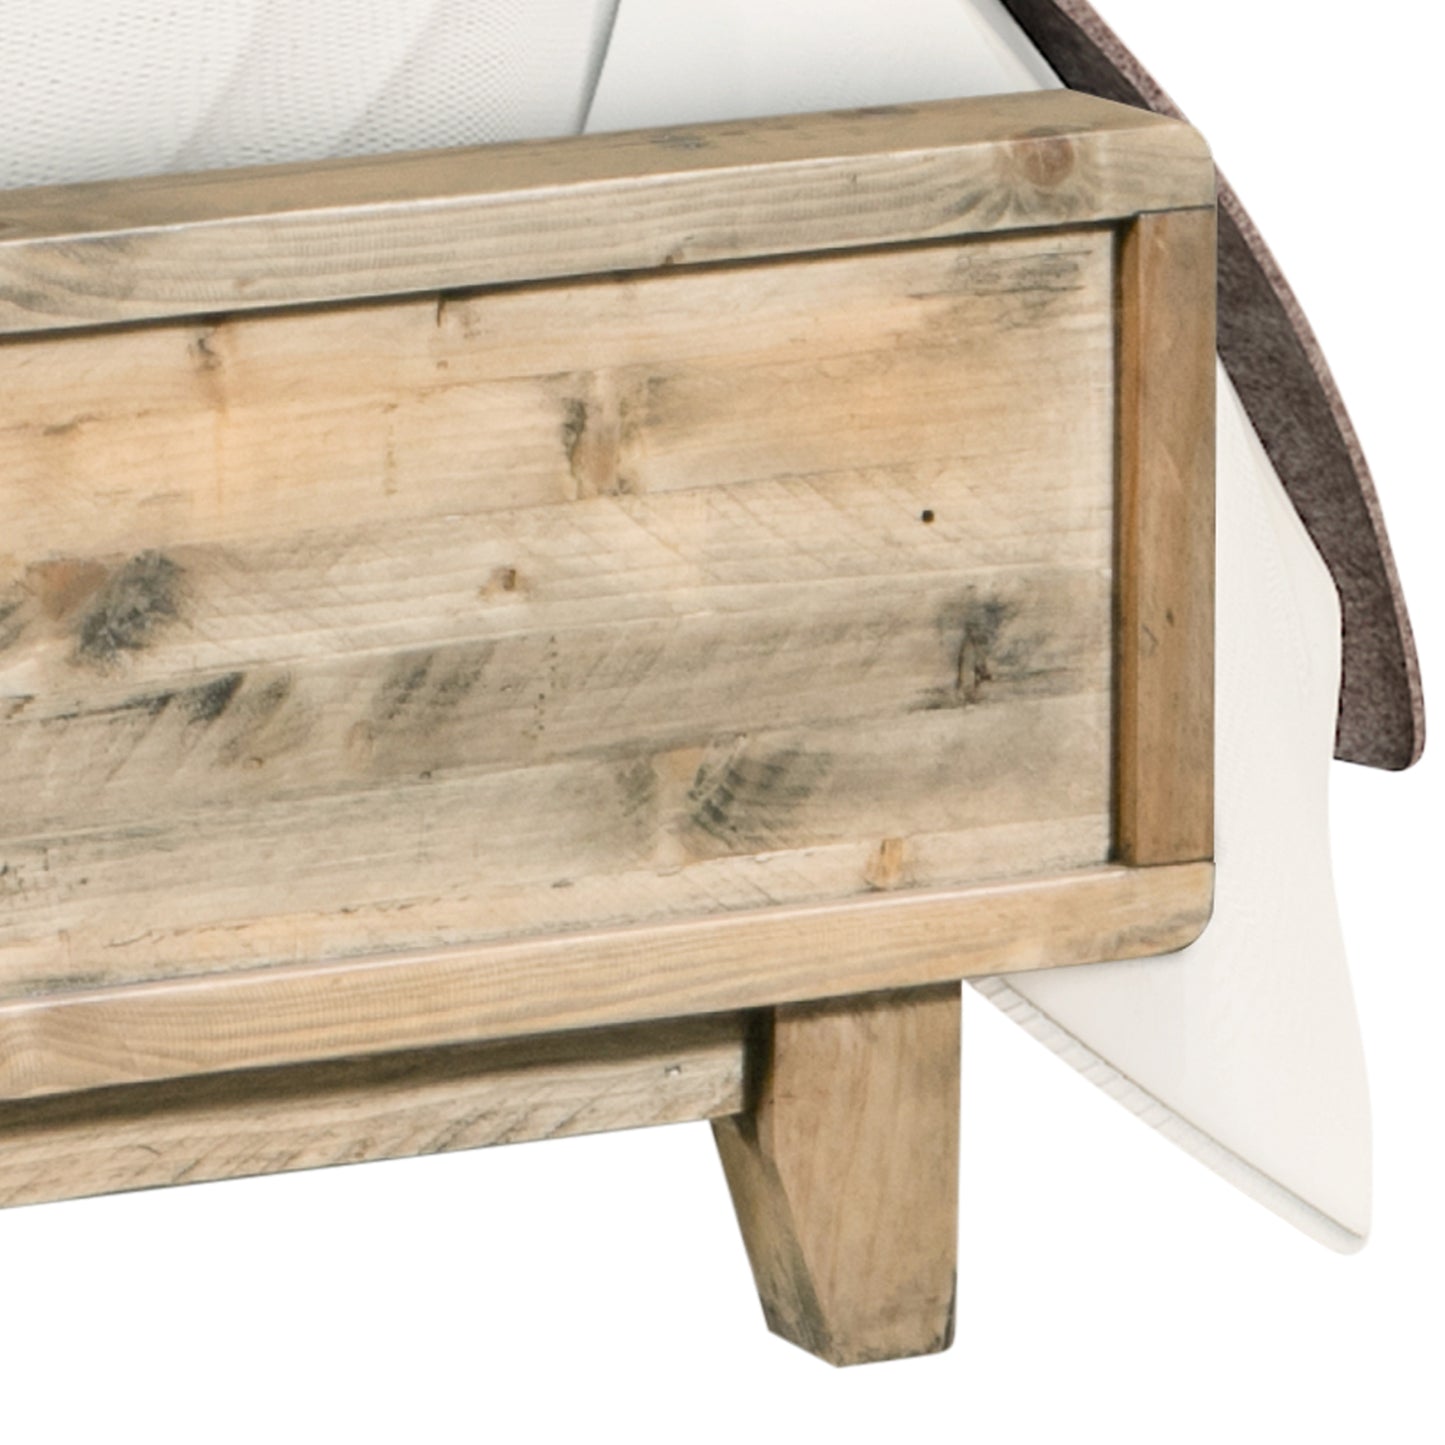 Queen Size Solid Wood Antique Design Bed Frame - Light Brown